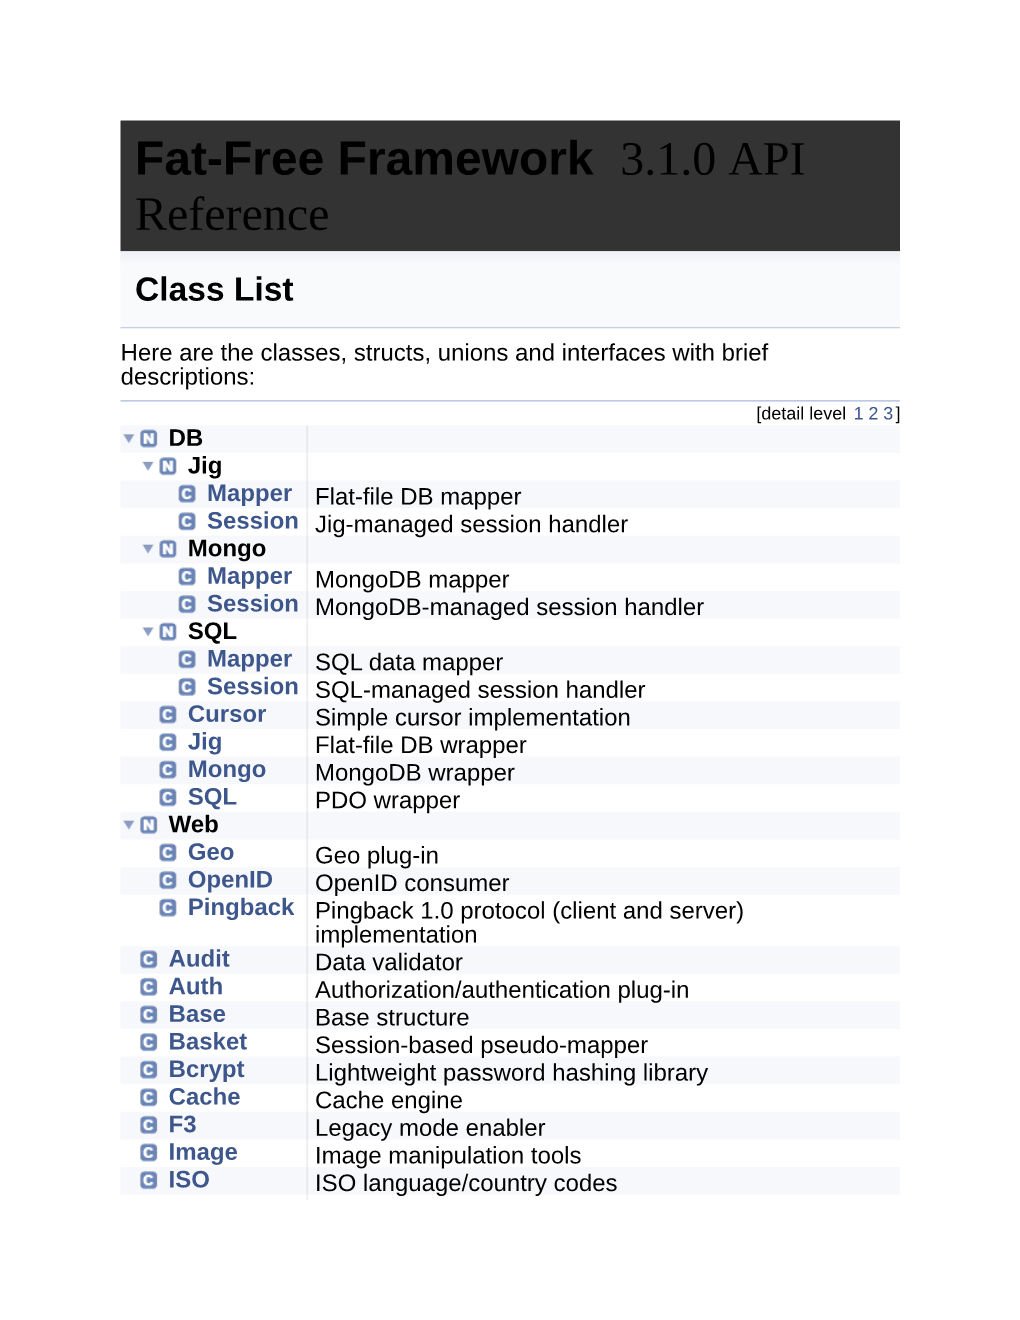 Fat-Free Framework 3.1.0 API Reference